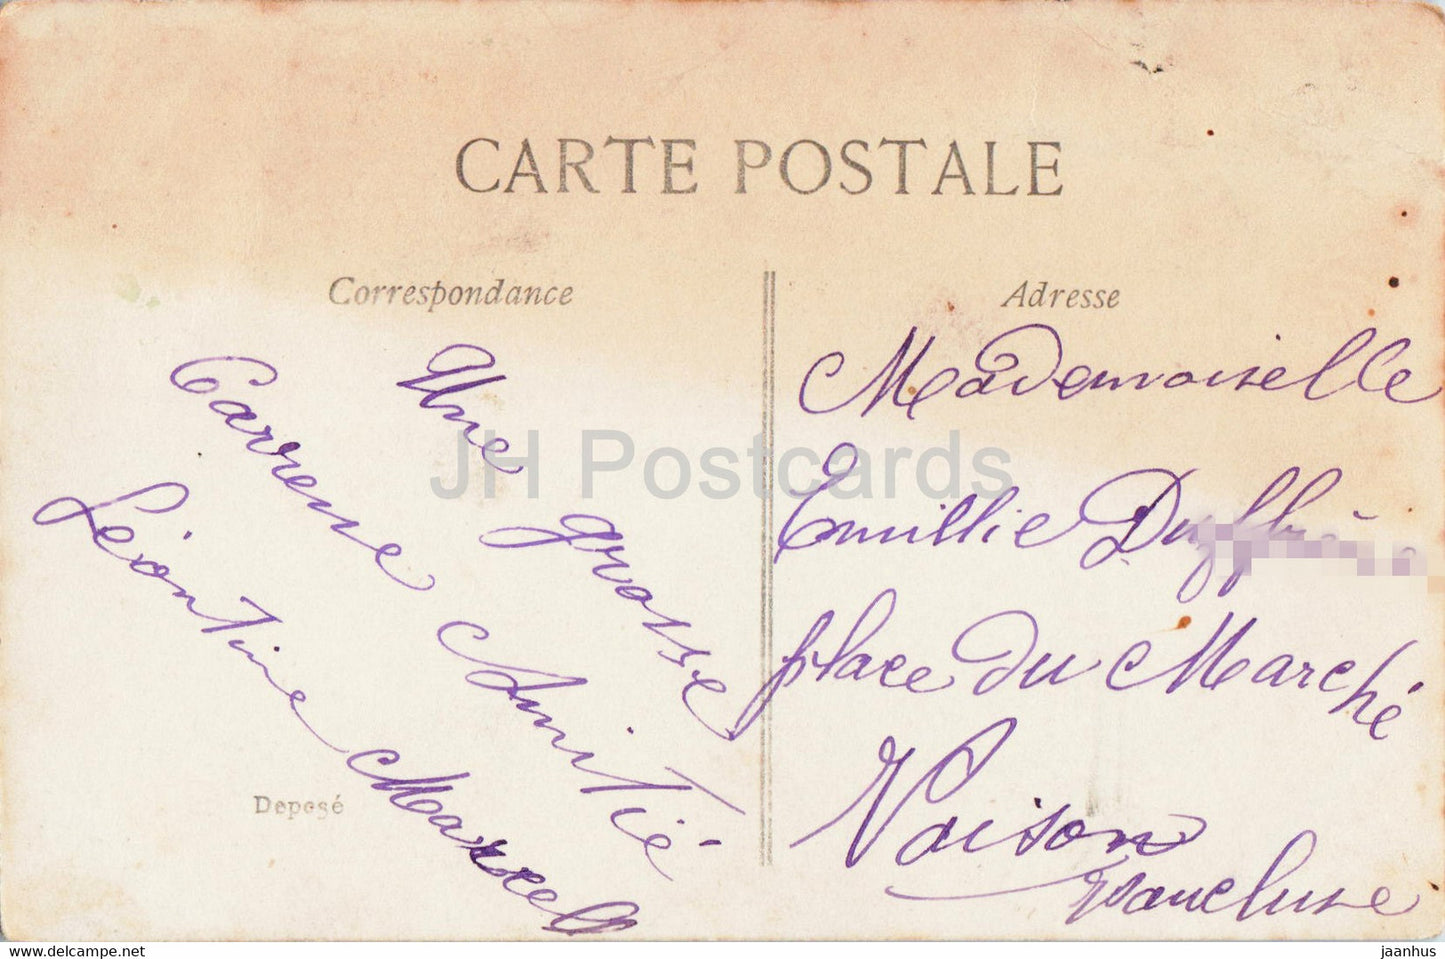 Wilhelm Tell - Guillaume Tell - debout j'honore la puissance - Theater - 4467 - ELD - alte Postkarte - Frankreich - gebraucht